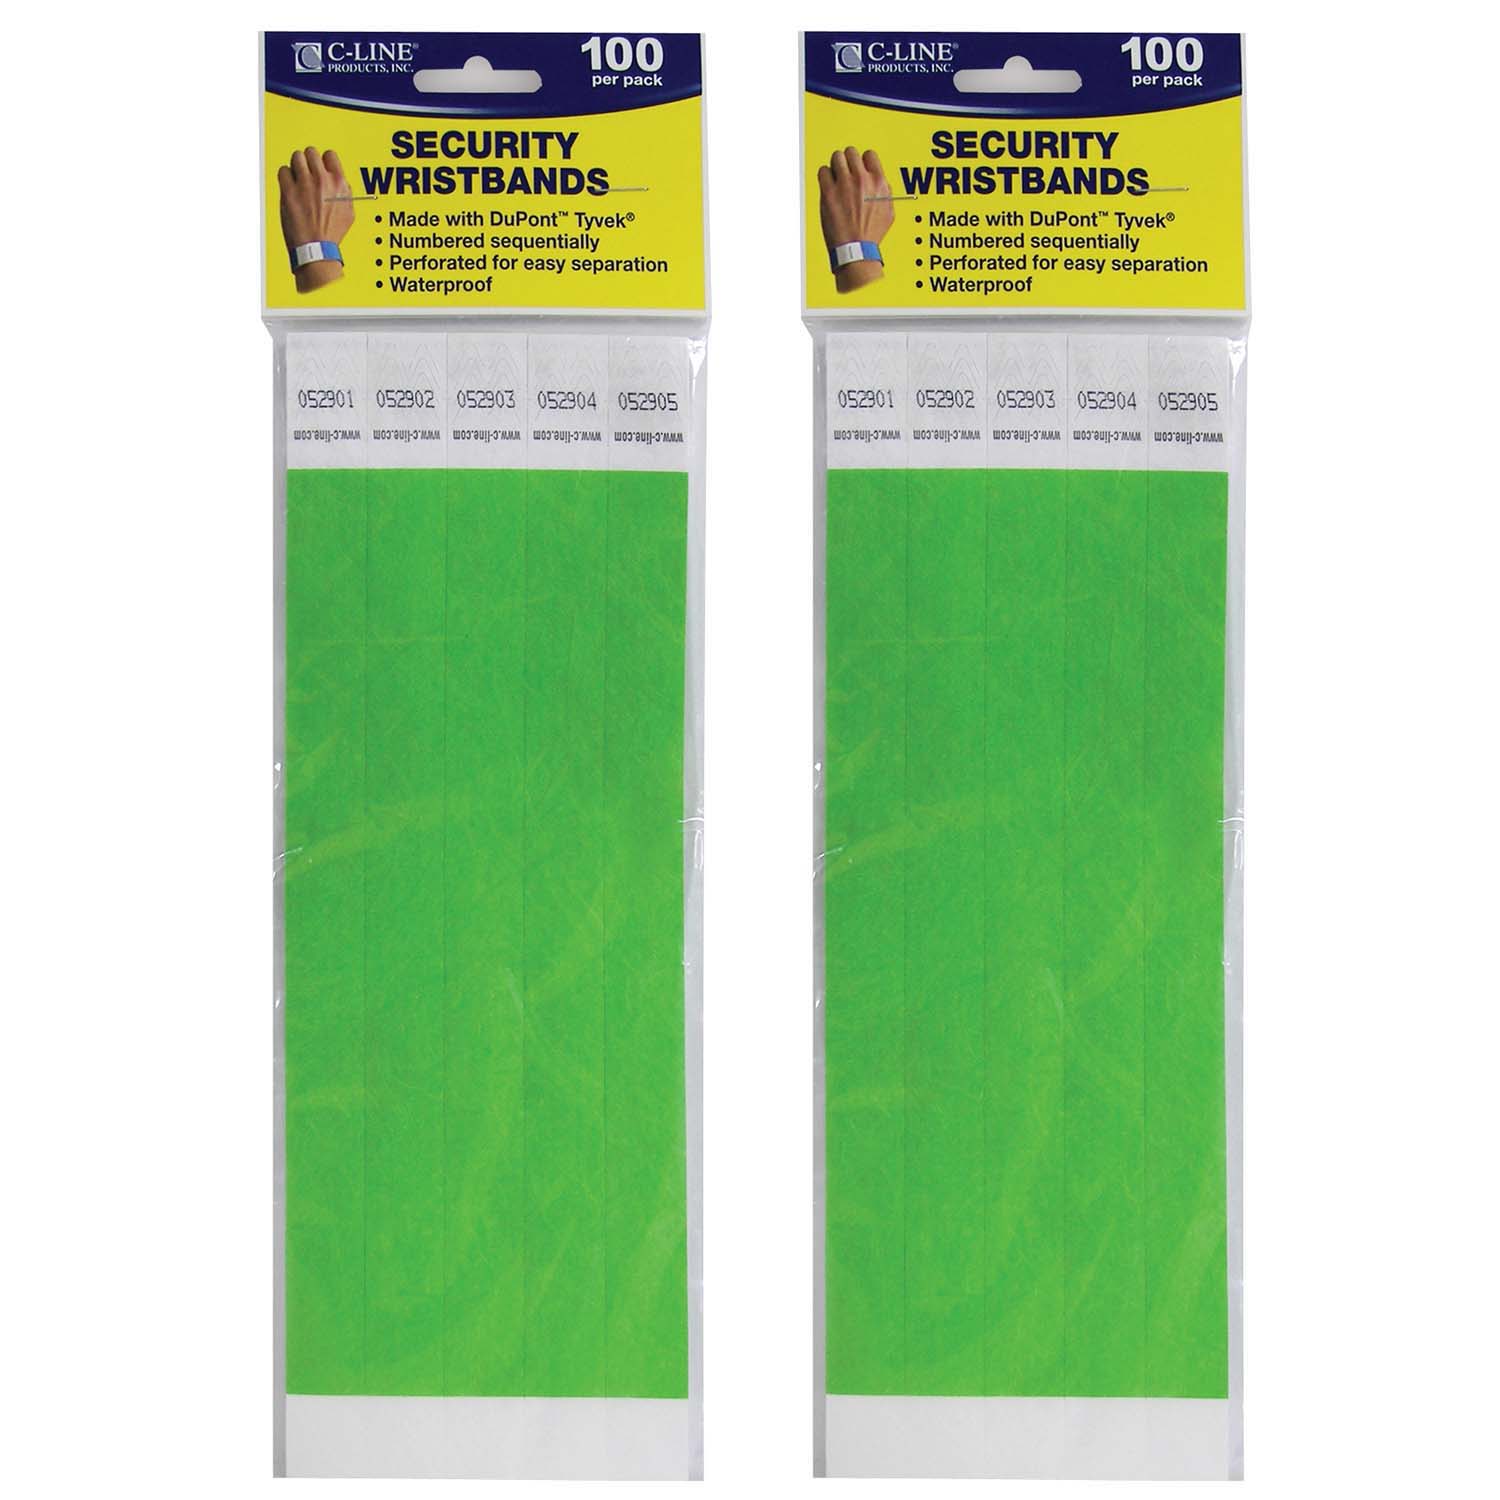 DuPont Tyvek Security Wristbands, Green, 100 Per Pack, 2 Packs